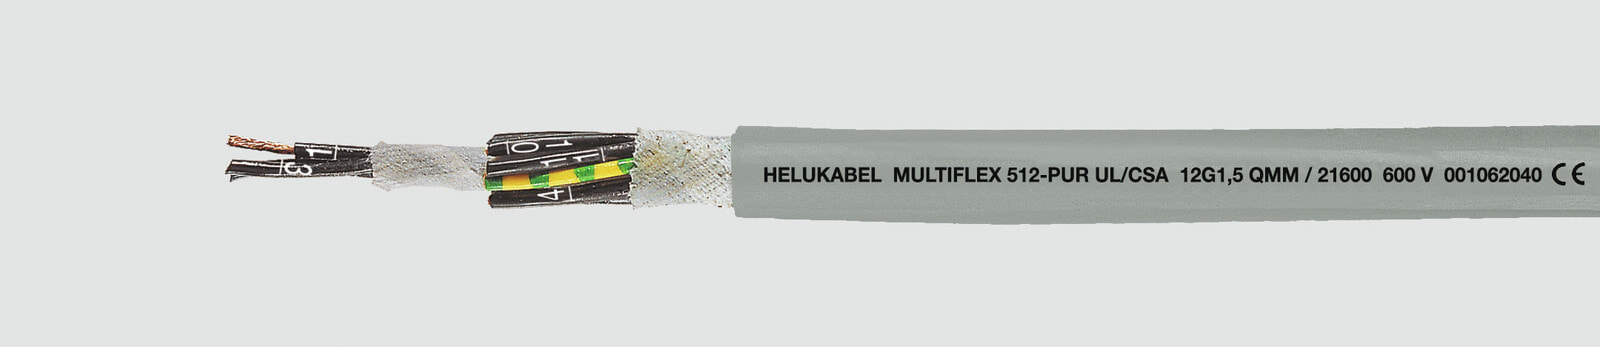 Helukabel MULTIFLEX 512-PUR UL/CSA - Medium voltage cable - Grey - Polyvinyl chloride (PVC) - Cooper - 4 G 1.5 - 58 kg/km